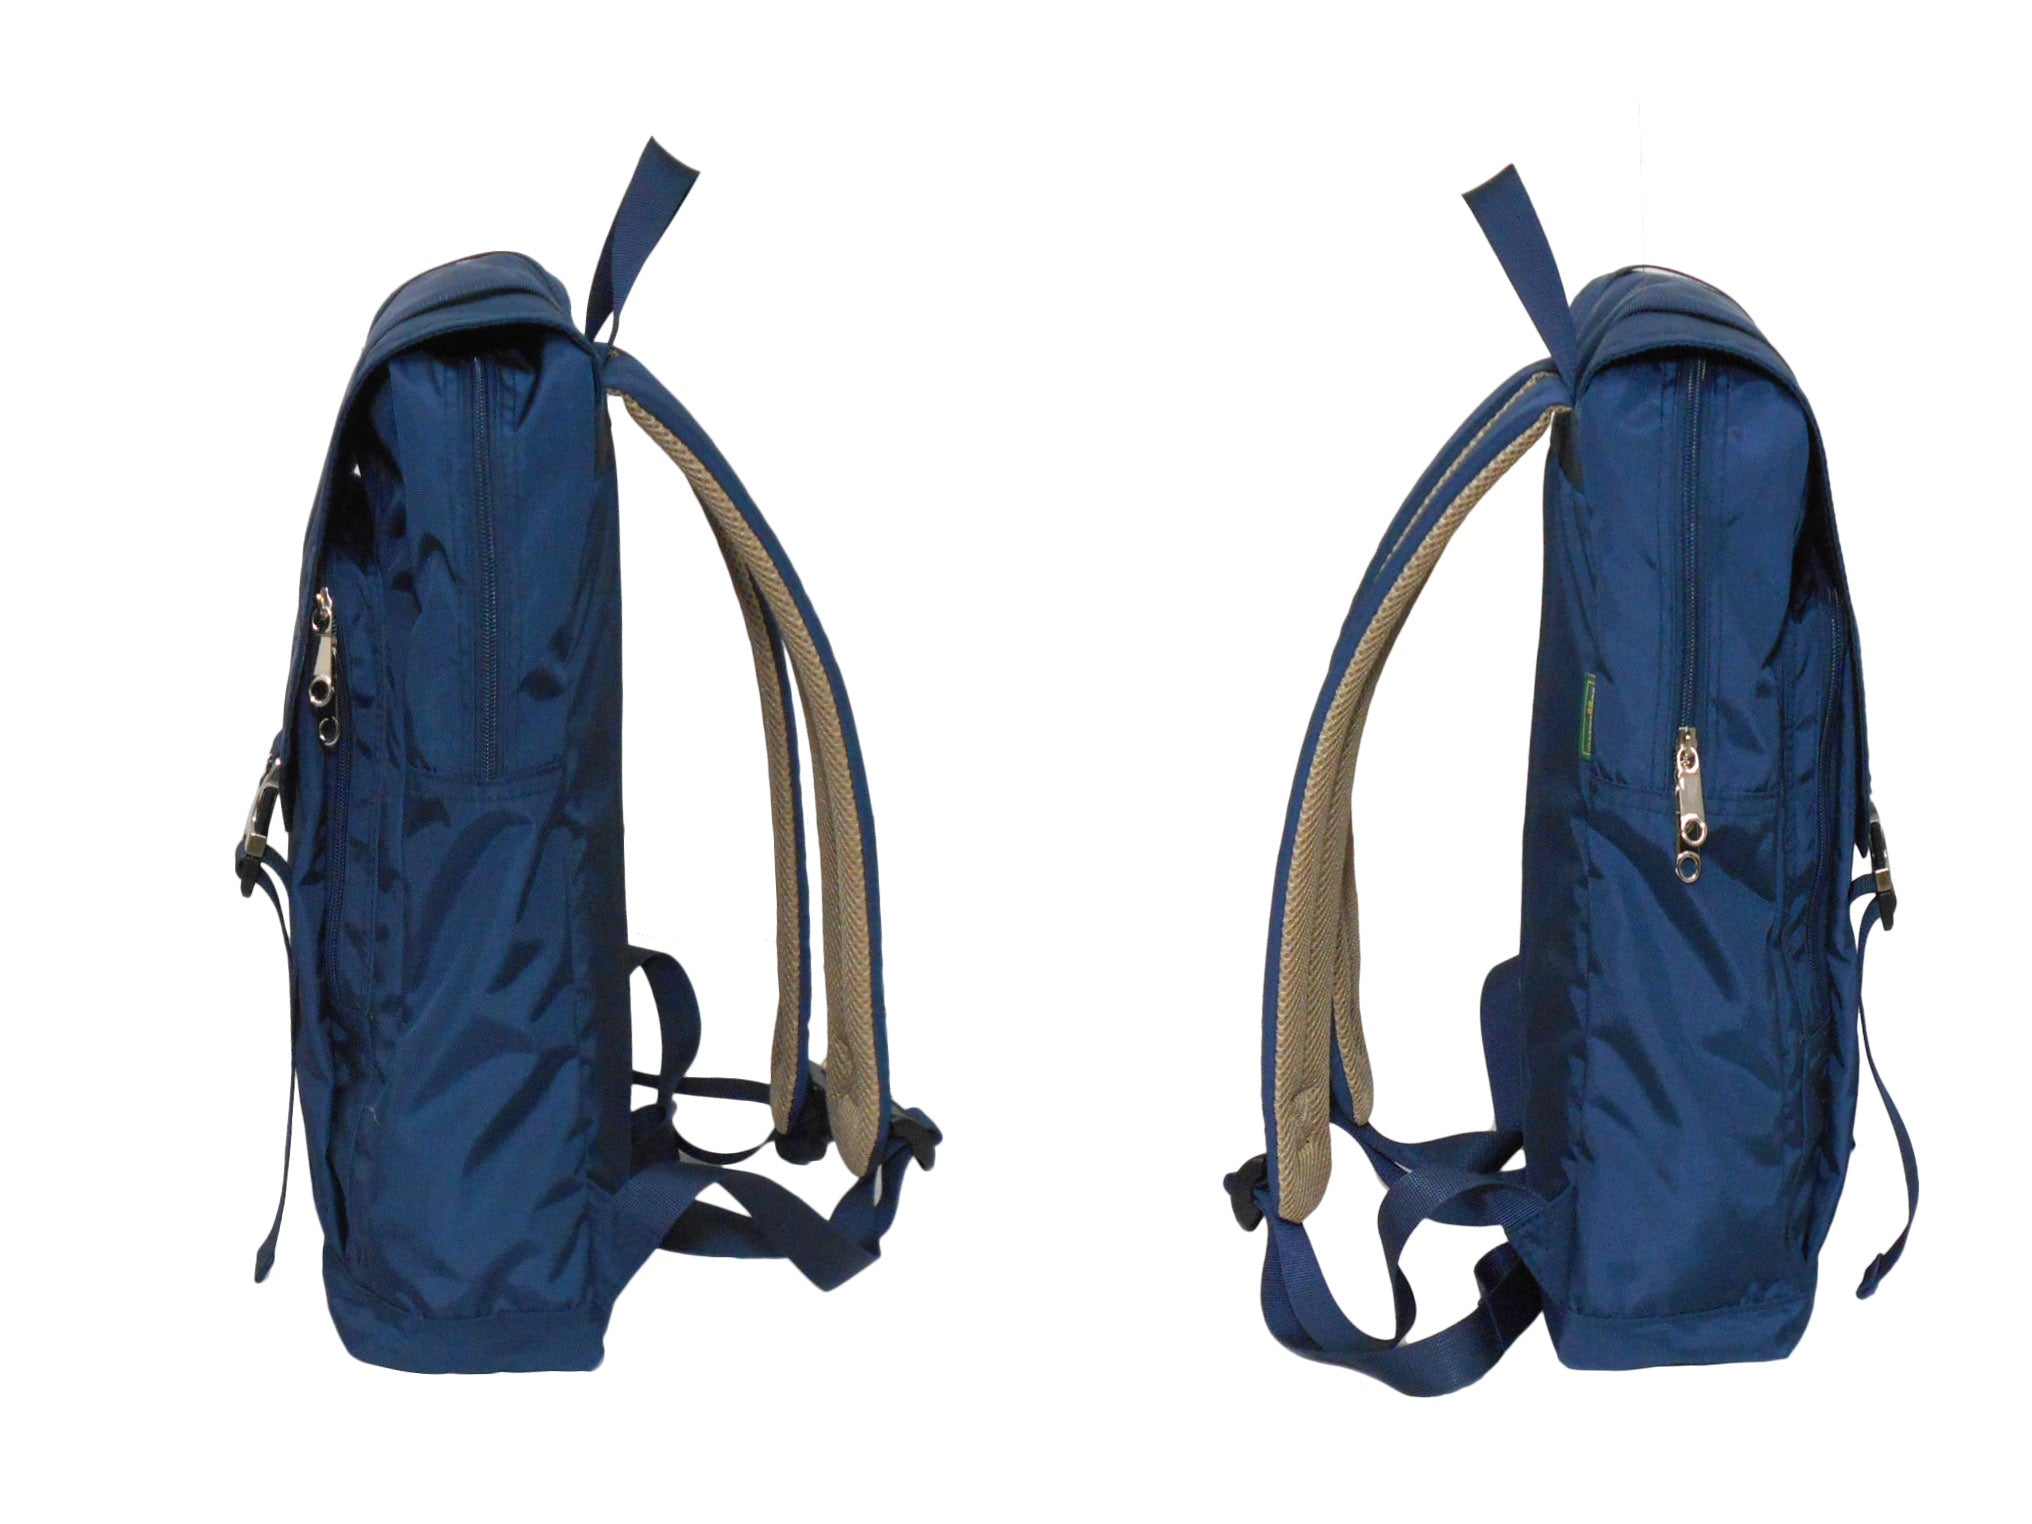 Surblue Felt Backpack Organizer Insert for Travel Rucksack and Daypack, Bag  Insert Liner Pocket with…See more Surblue Felt Backpack Organizer Insert